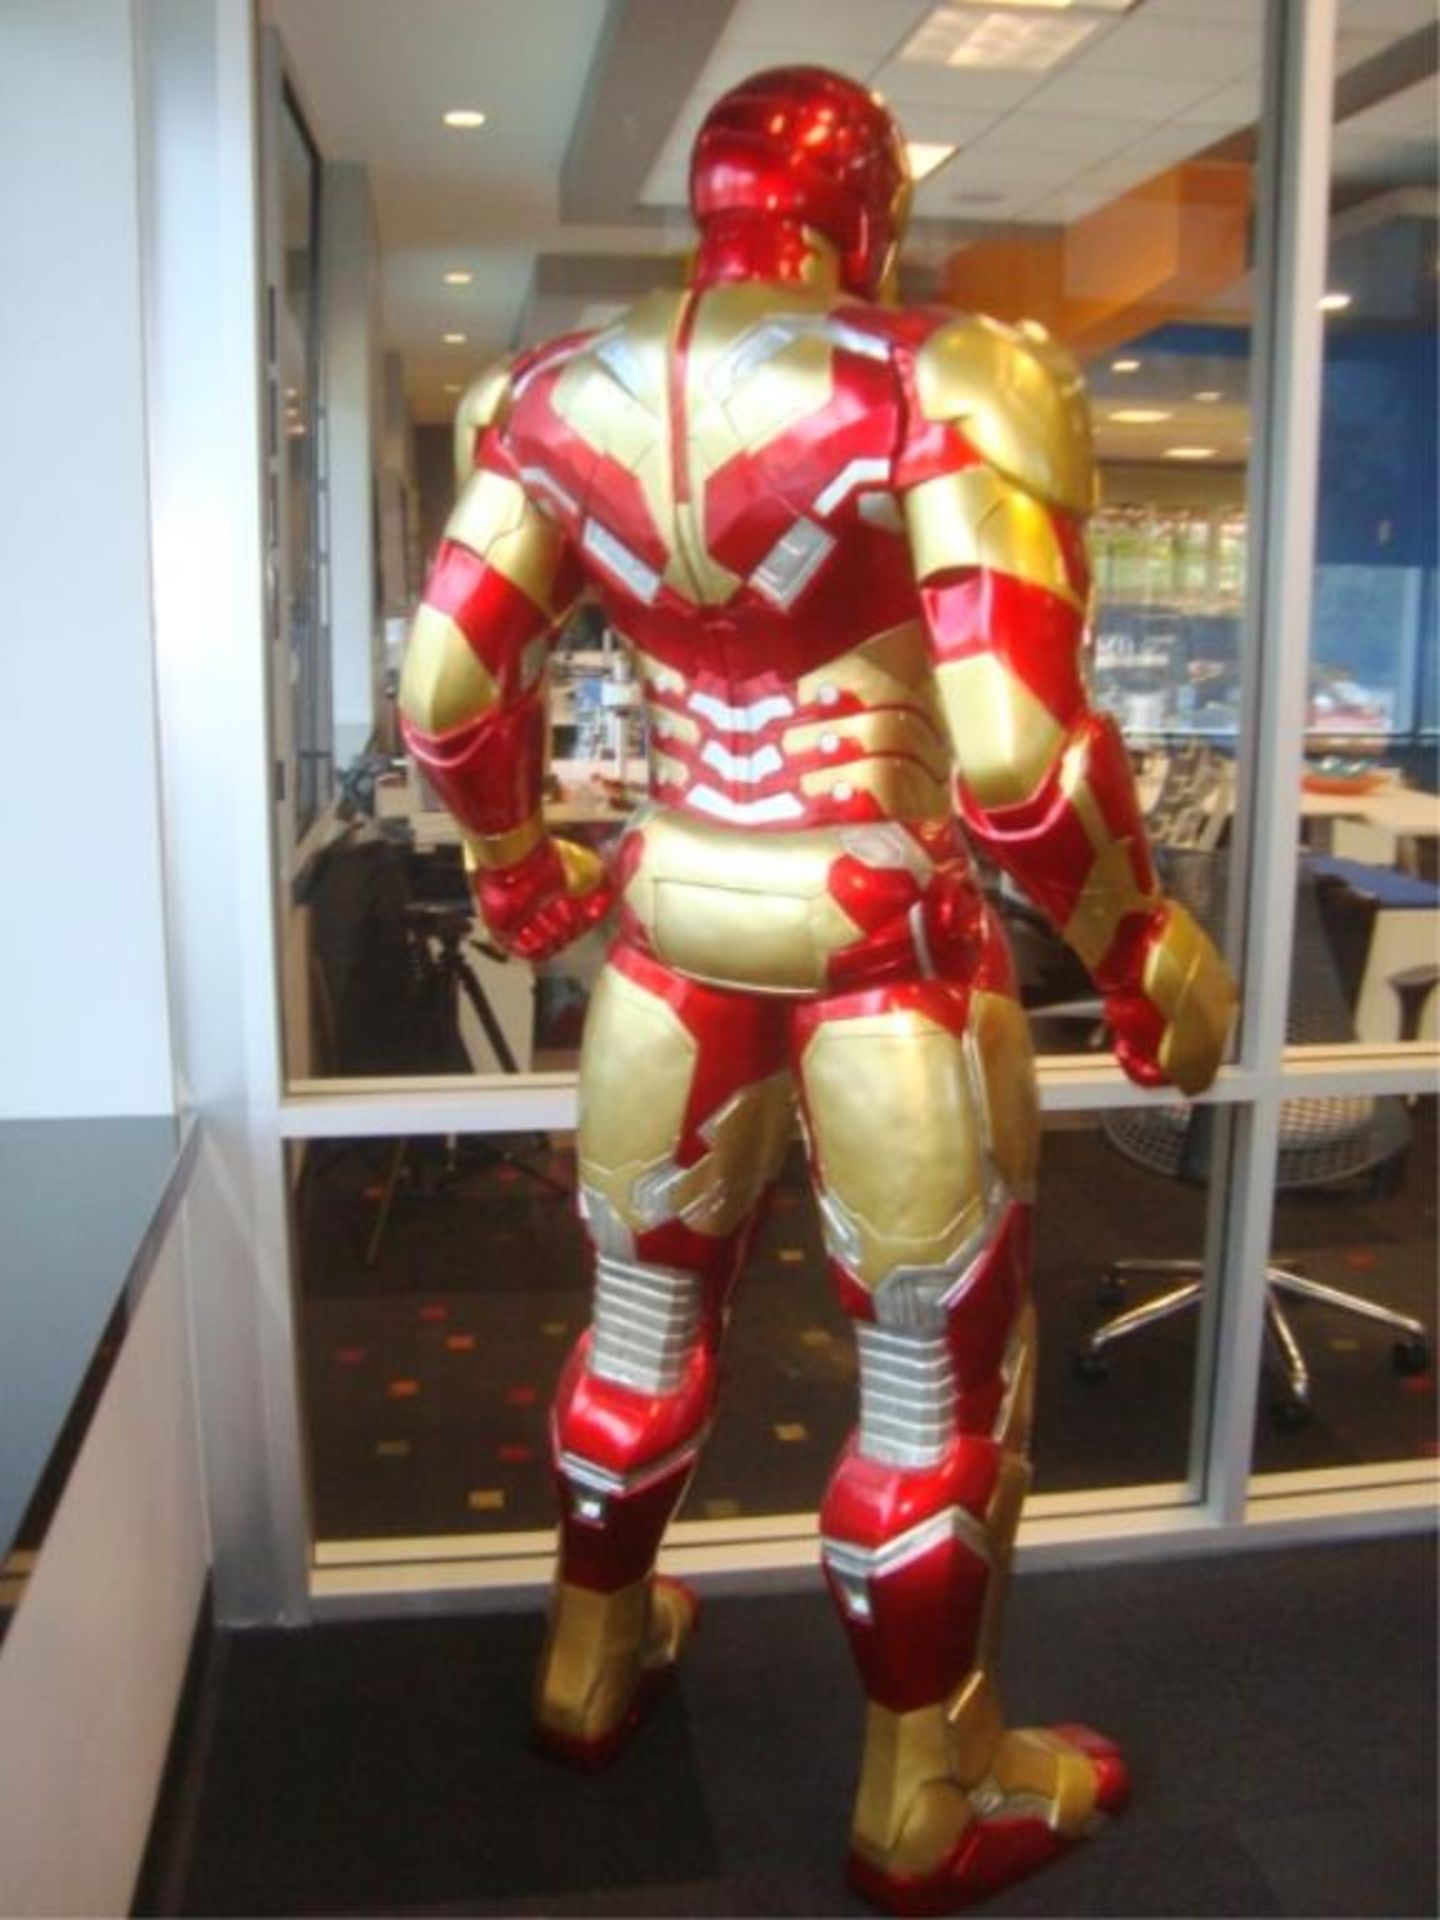 Marvel "IRON MAN 2" Super Hero - Image 4 of 6